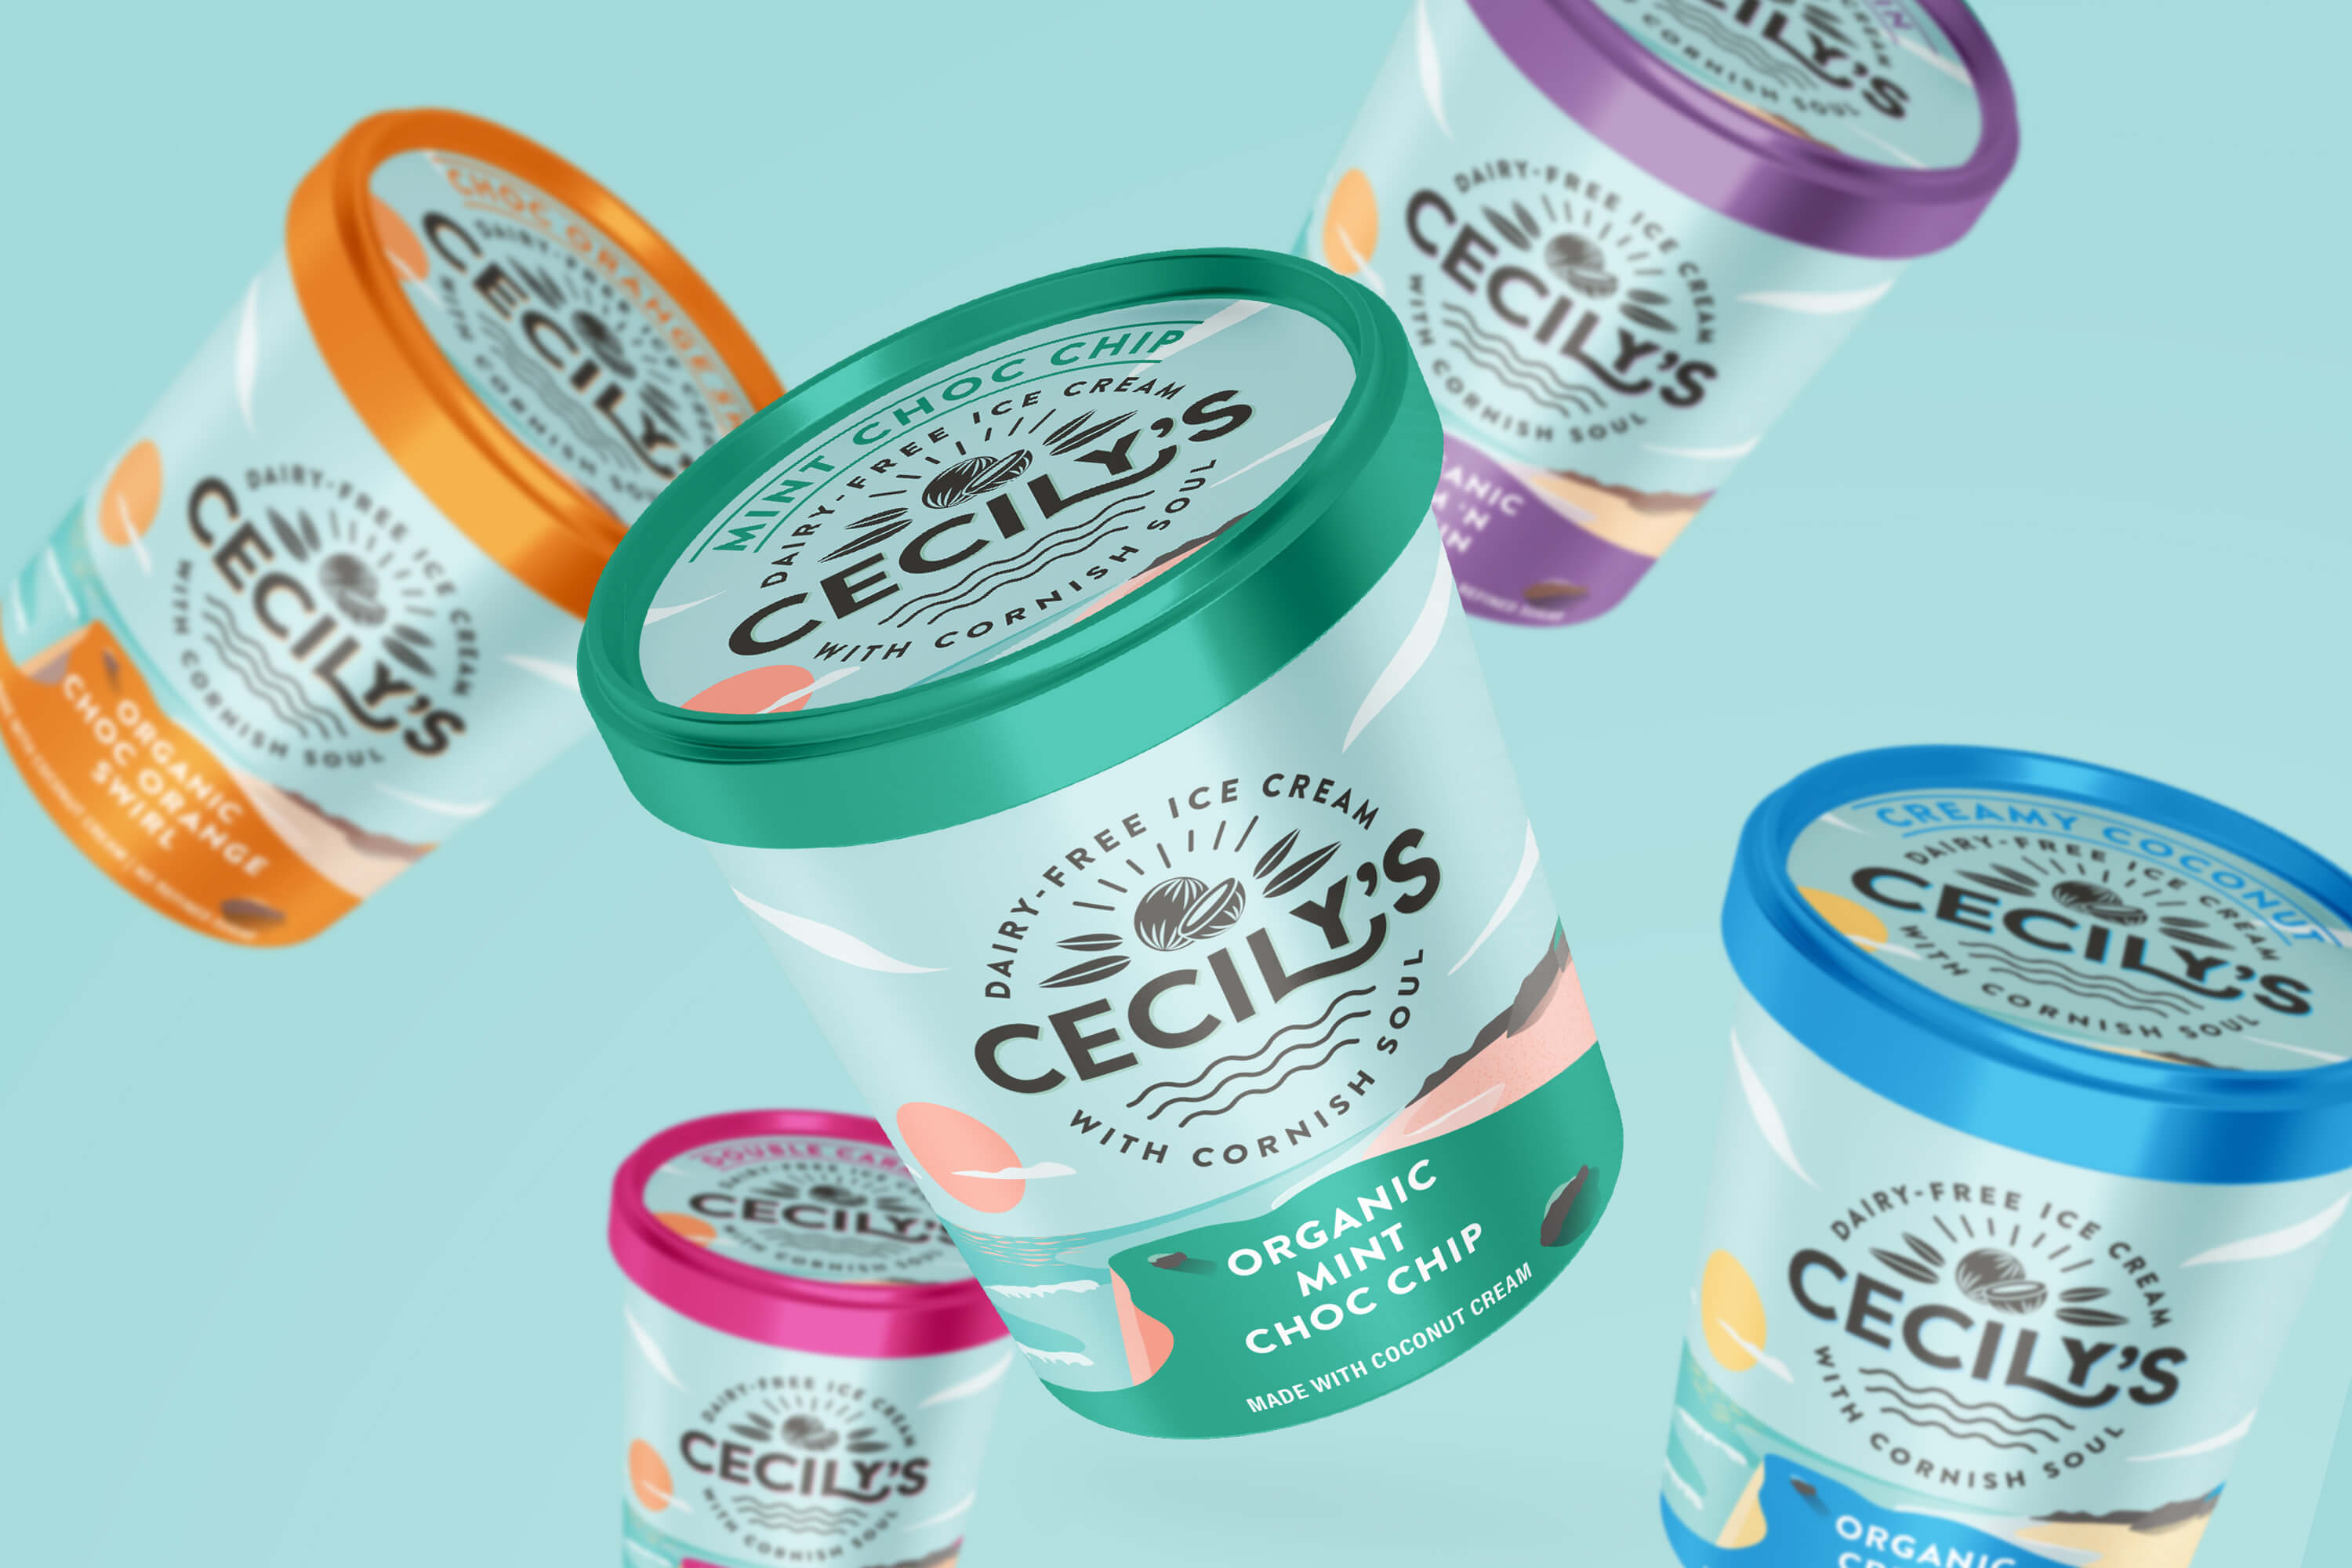 The Space Creative Transform Dairy-Free Ice Cream Brand Cecily’s